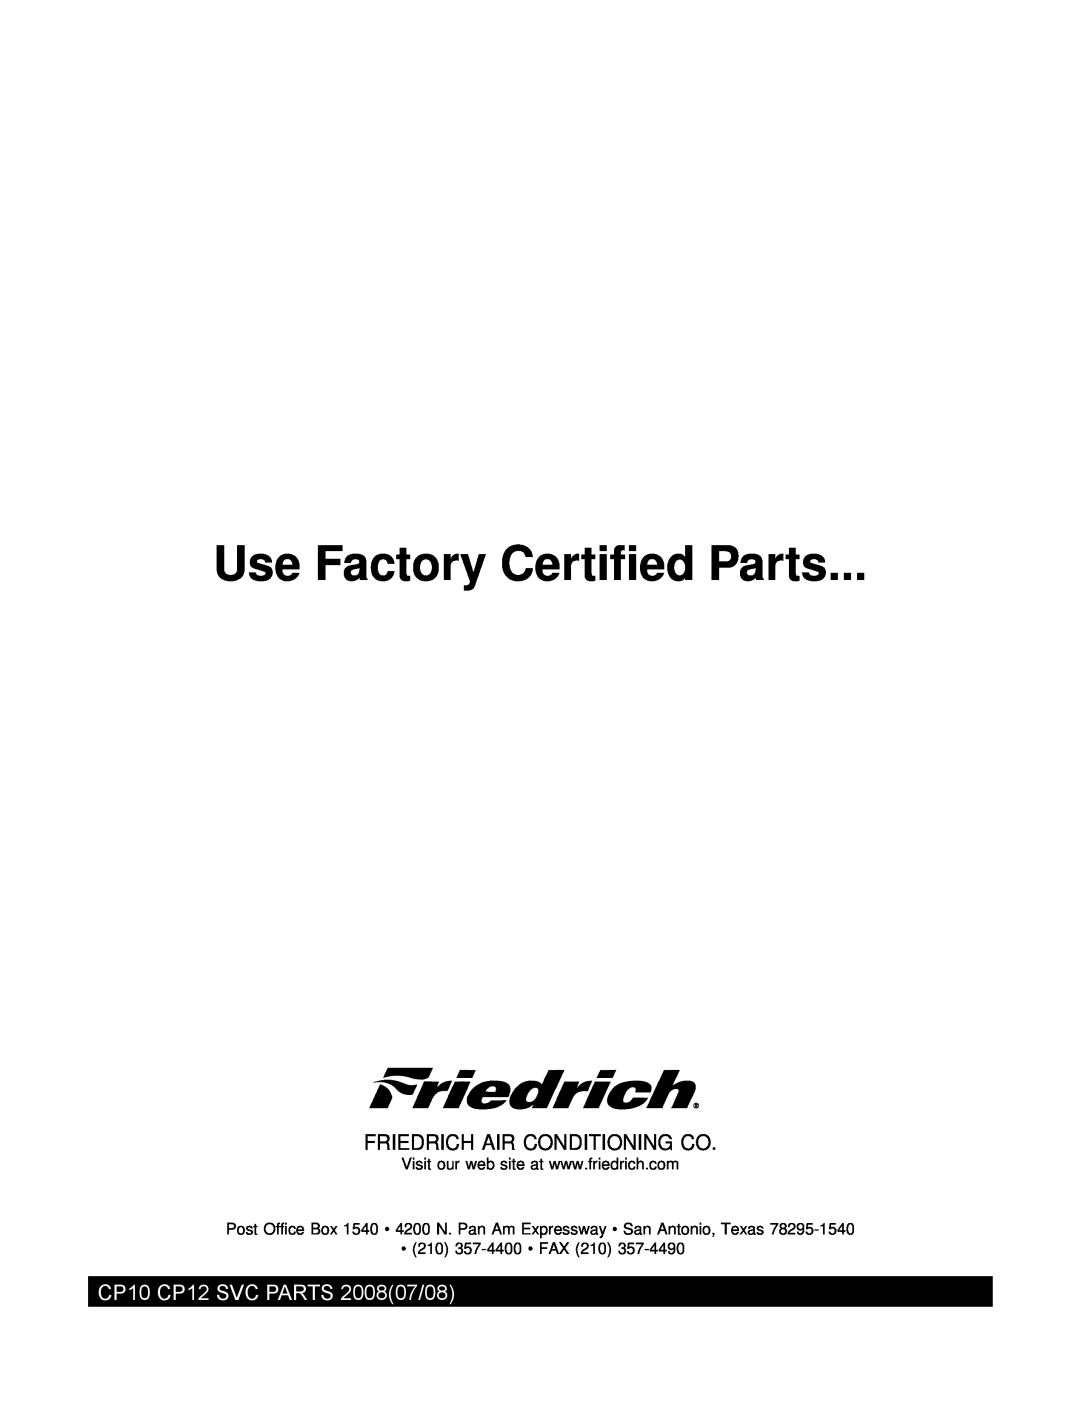 Friedrich CP10E10, CP12E10 manual CP10 CP12 SVC PARTS 200807/08, Use Factory Certified Parts, 210 357-4400 FAX 